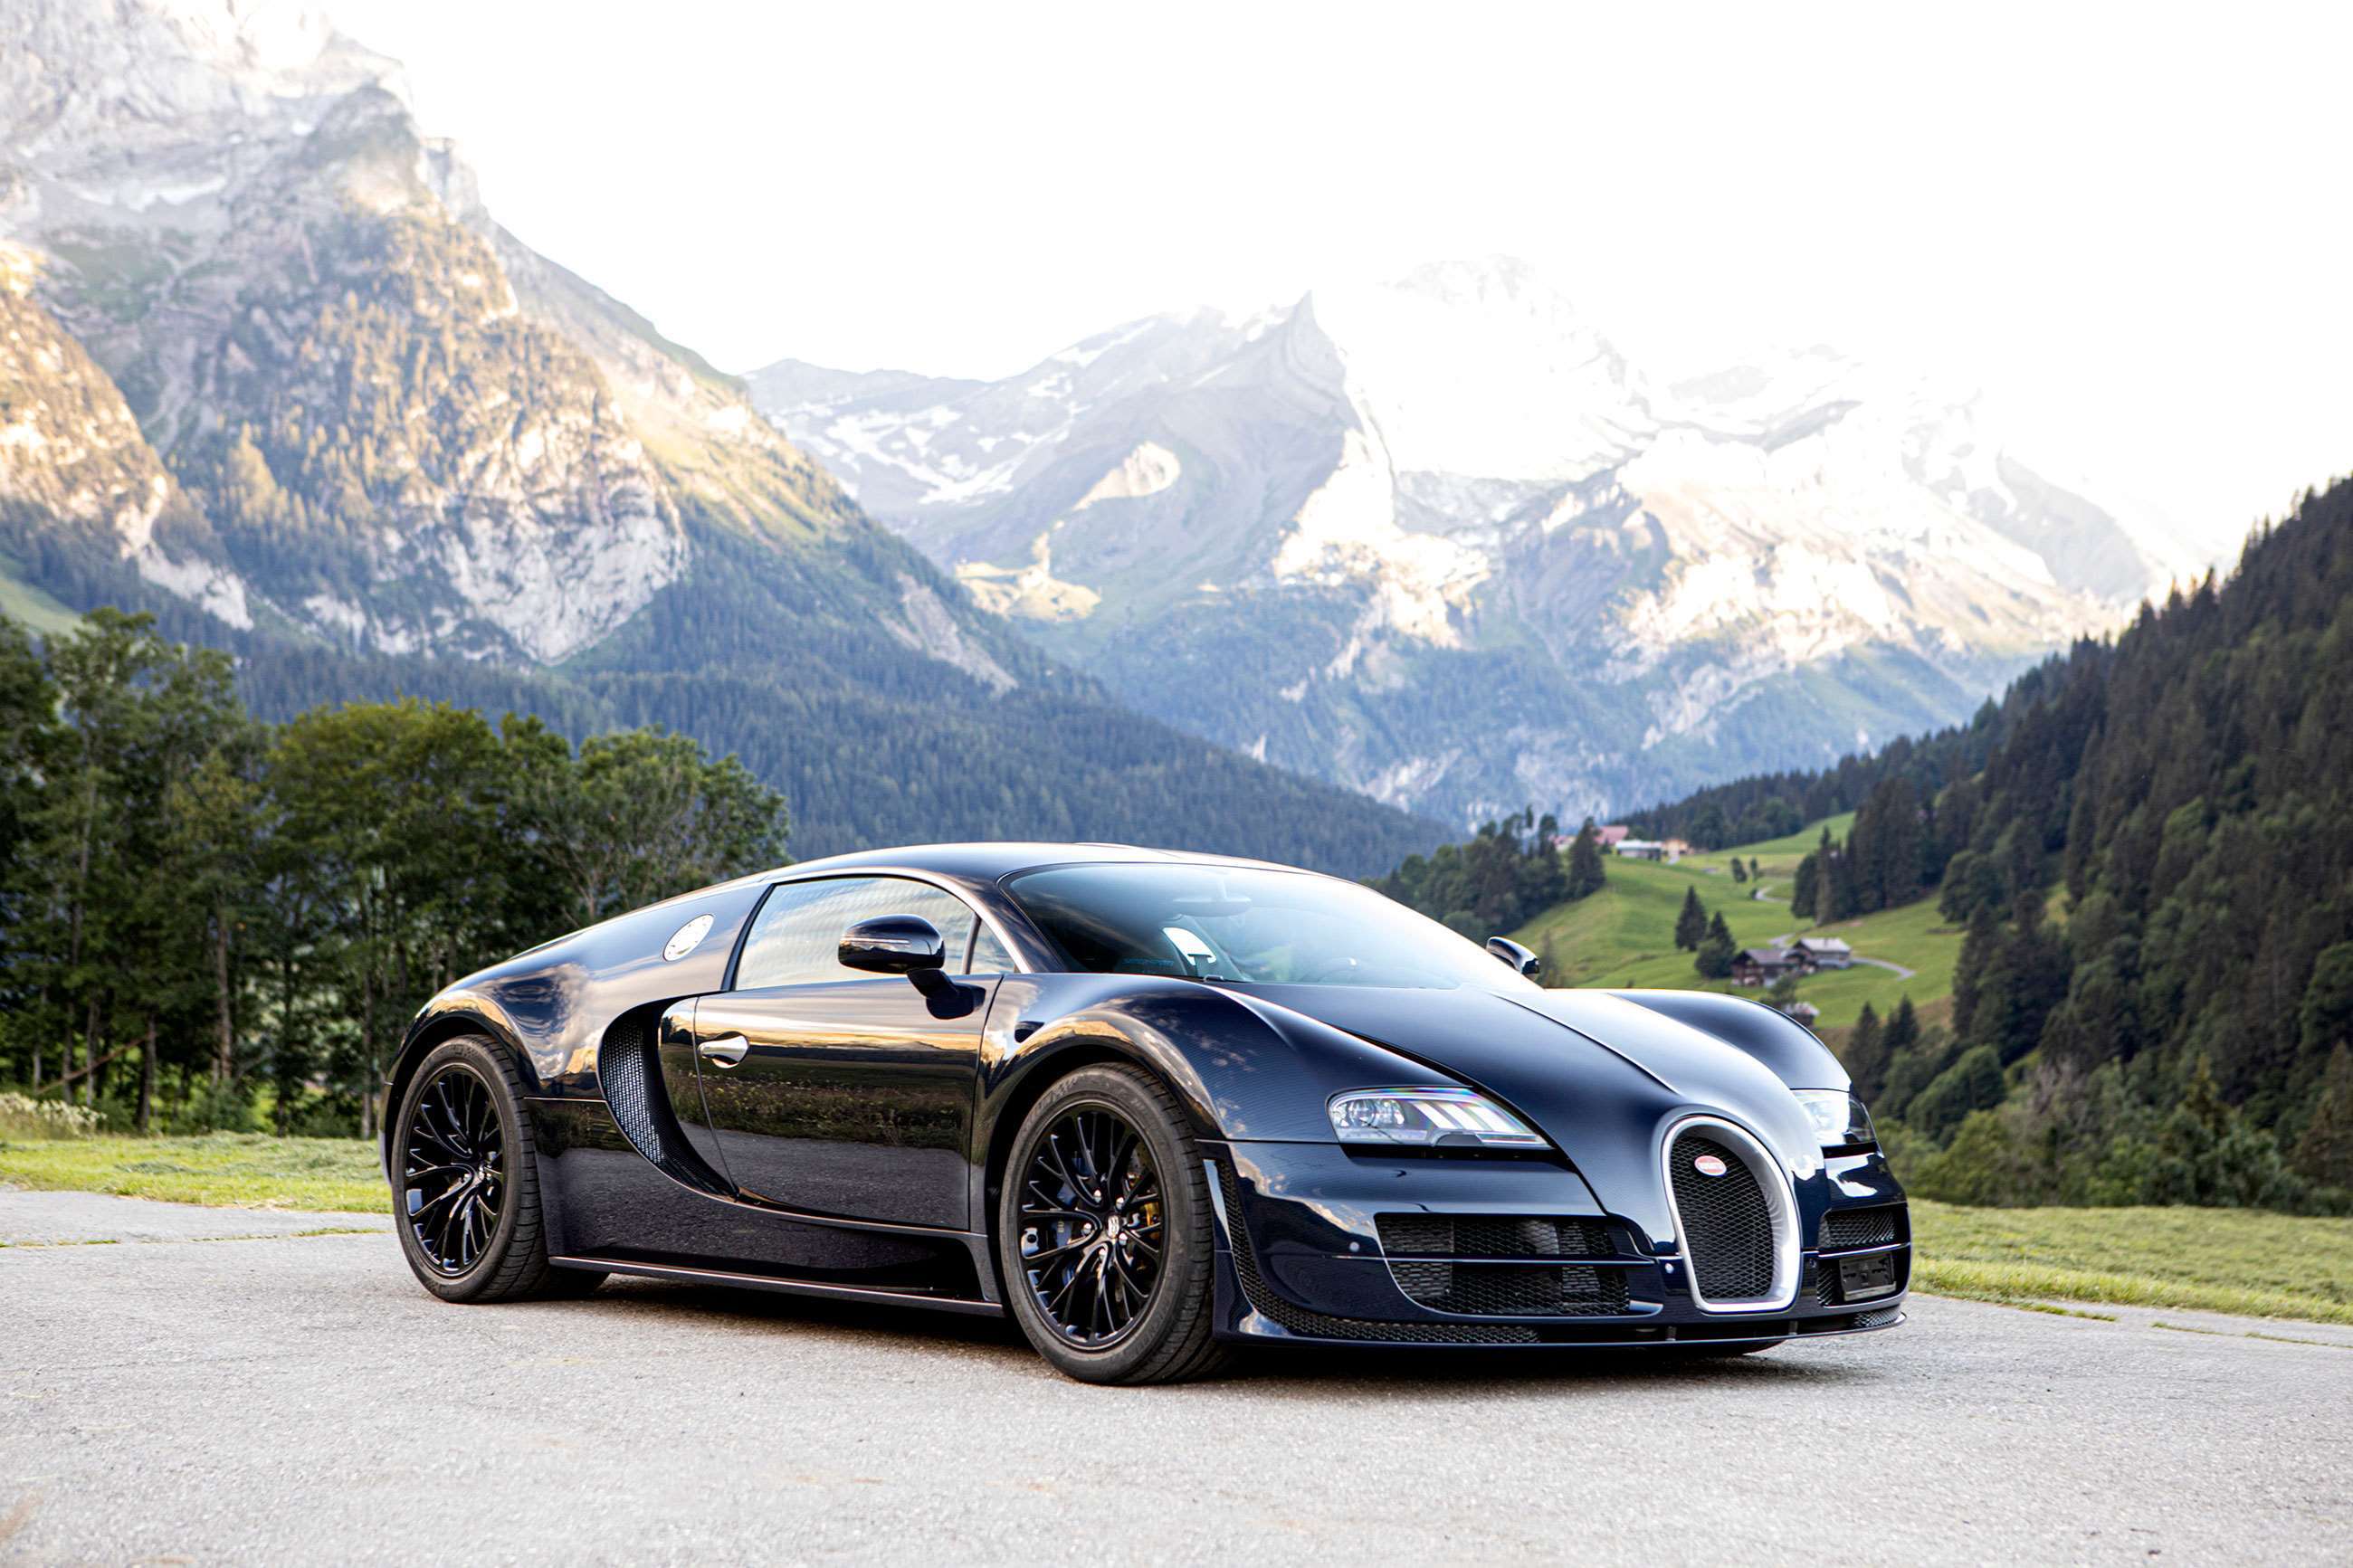 most-expensive-cars-2020-bonhams-7-bugatti-veyron-super-sport-2012-goodwood-14122020.jpg